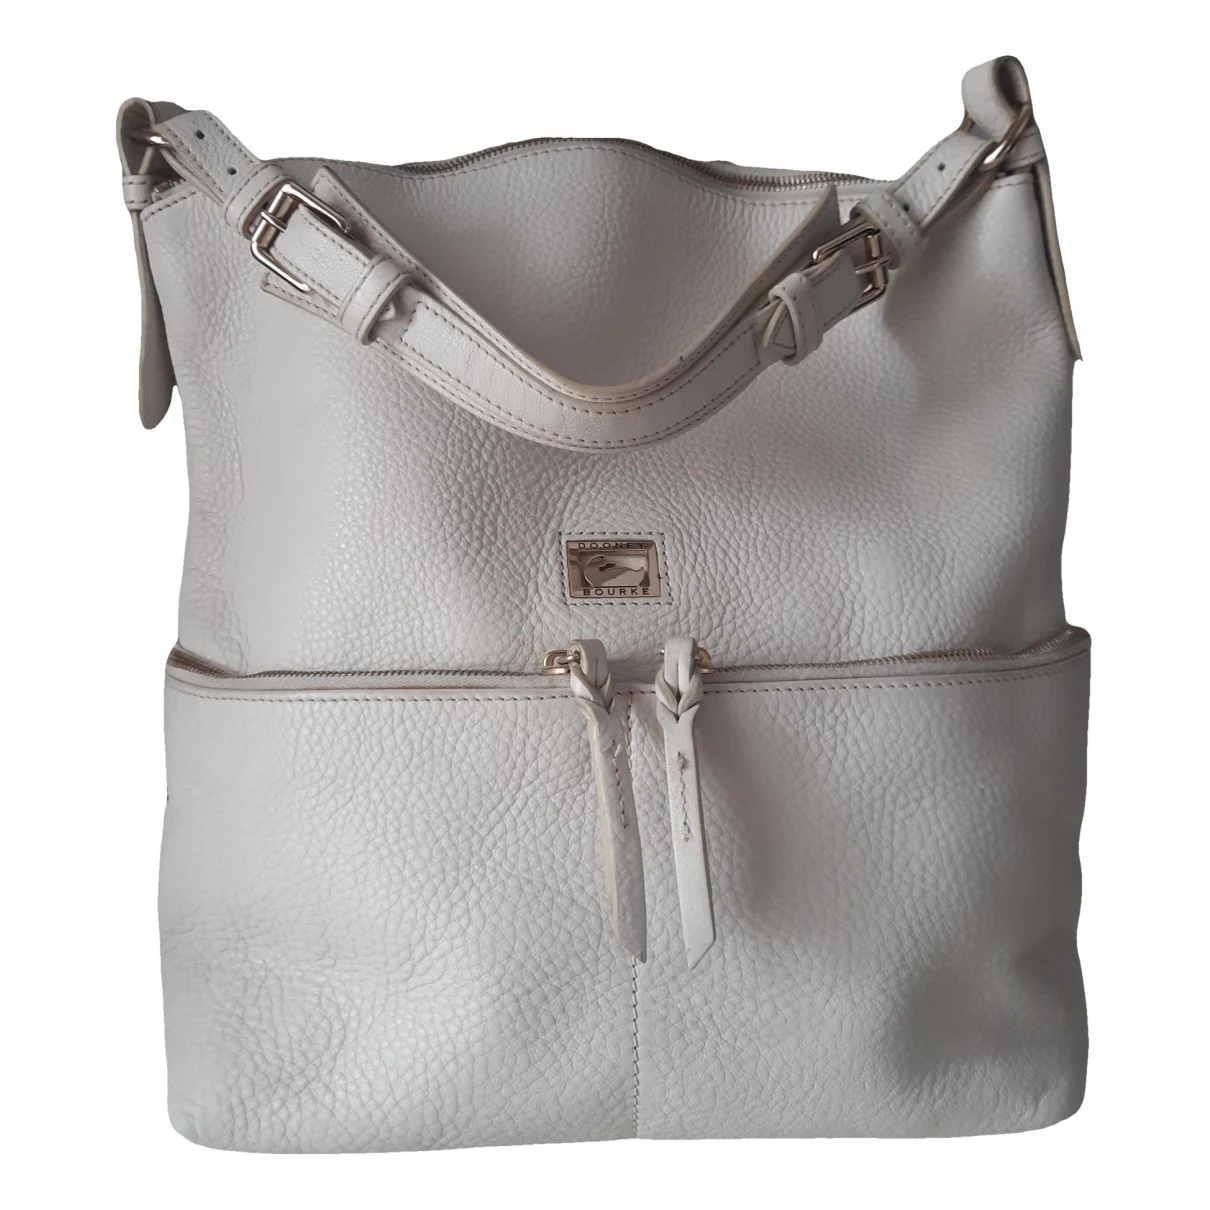 Pre-owned Dooney & Bourke Leather Handbag In White